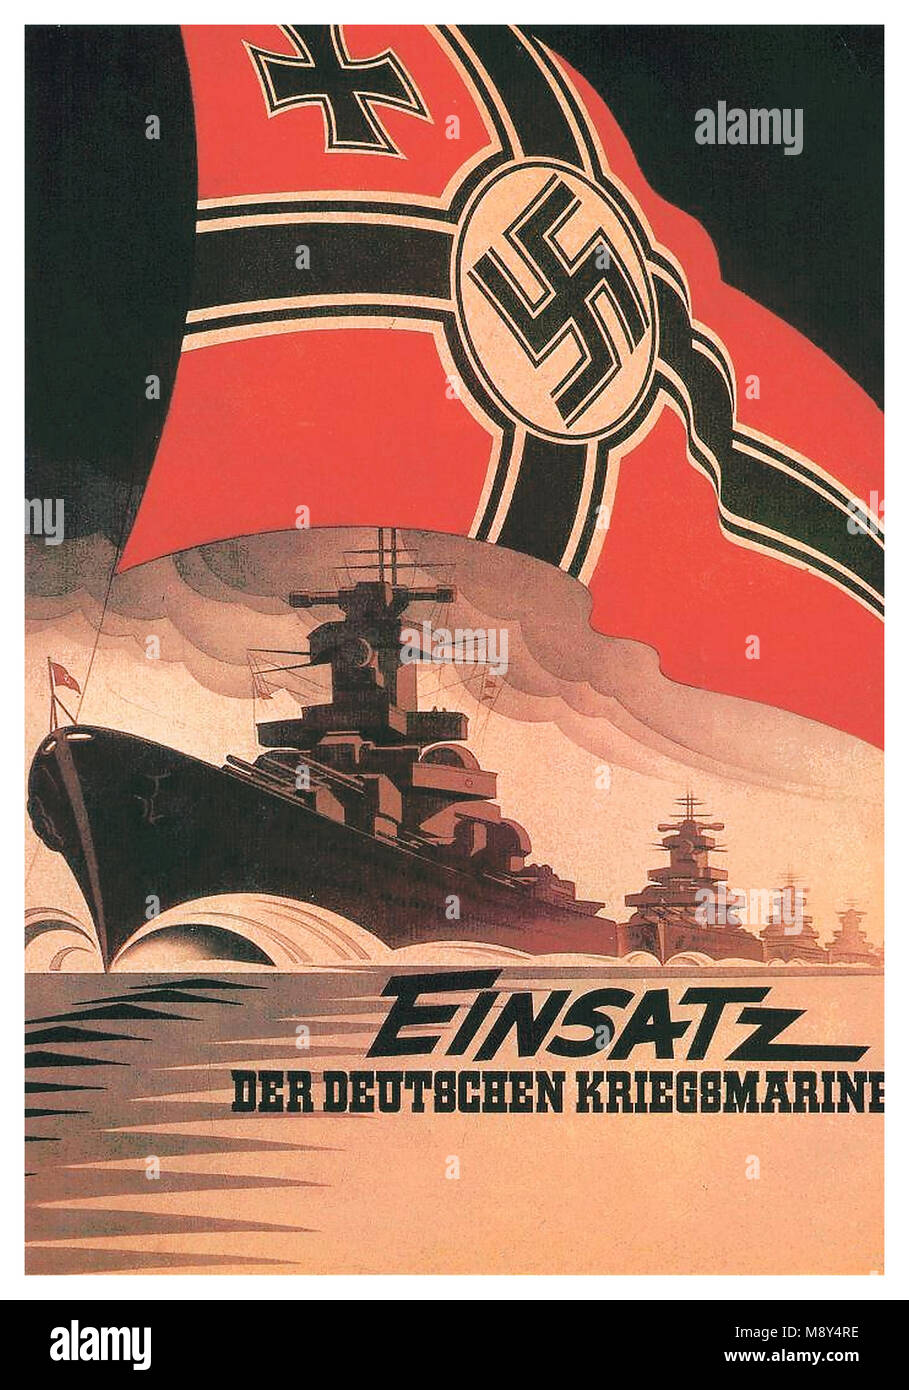 1942 Vintage German Propaganda Poster WW2 Kriegsmarine German Navy pocket battleships committed to a Battle Mission flying the German Navy Swastika Flag Stock Photo